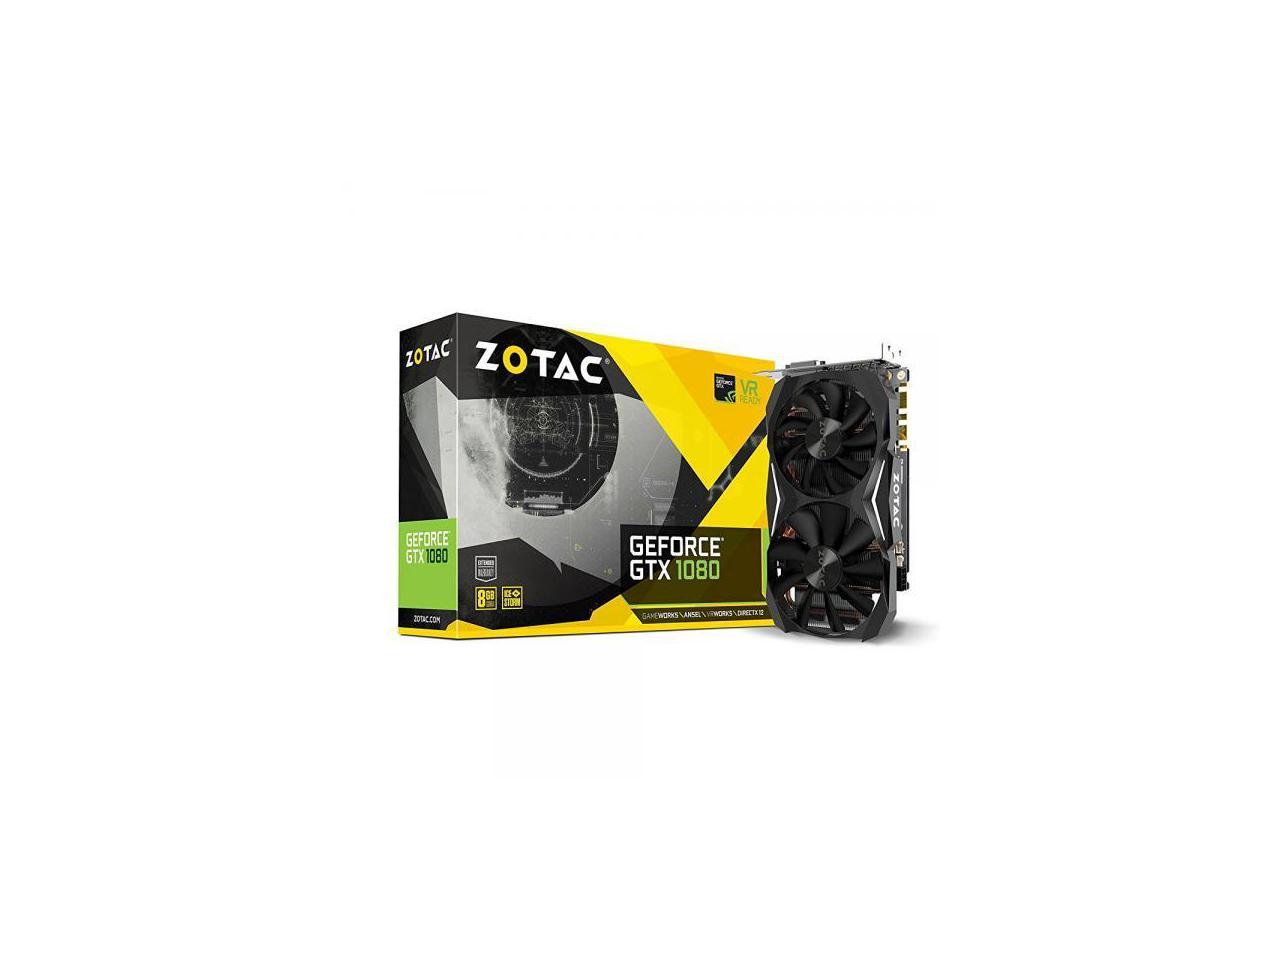 ZOTAC GeForce GTX 1080 Mini 8GB GDDR5X VR Ready Gaming Graphic Card, DisplayPort 1.4, 1x HDMI 2.0, Dual-link DVI (ZT-P10800H-10P)